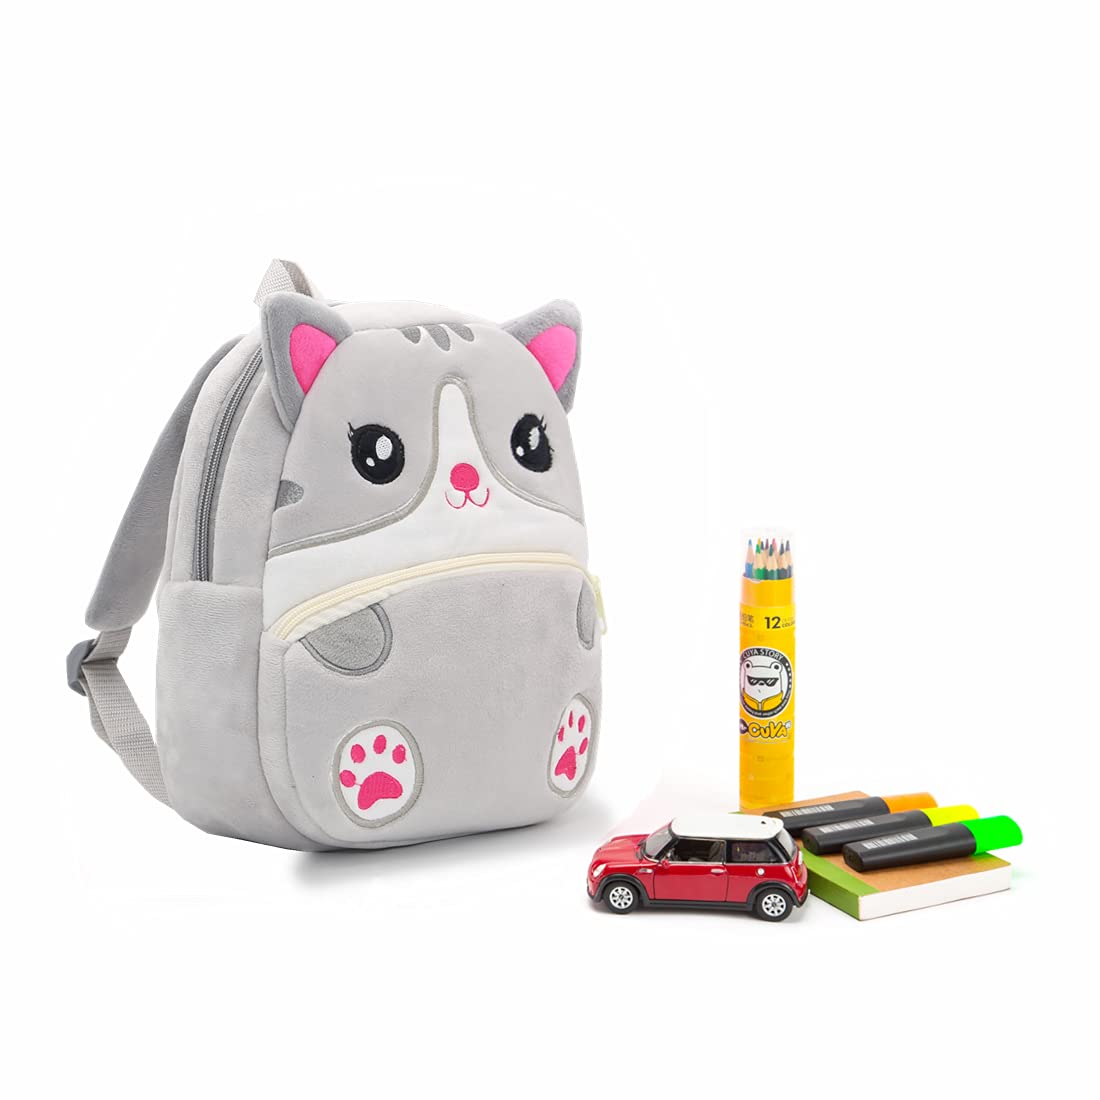 NICE CHOICE Cute Toddler Backpack Toddler Bag Plush Animal Cartoon Mini Travel Bag for Baby Girl Boy 2-6 Years